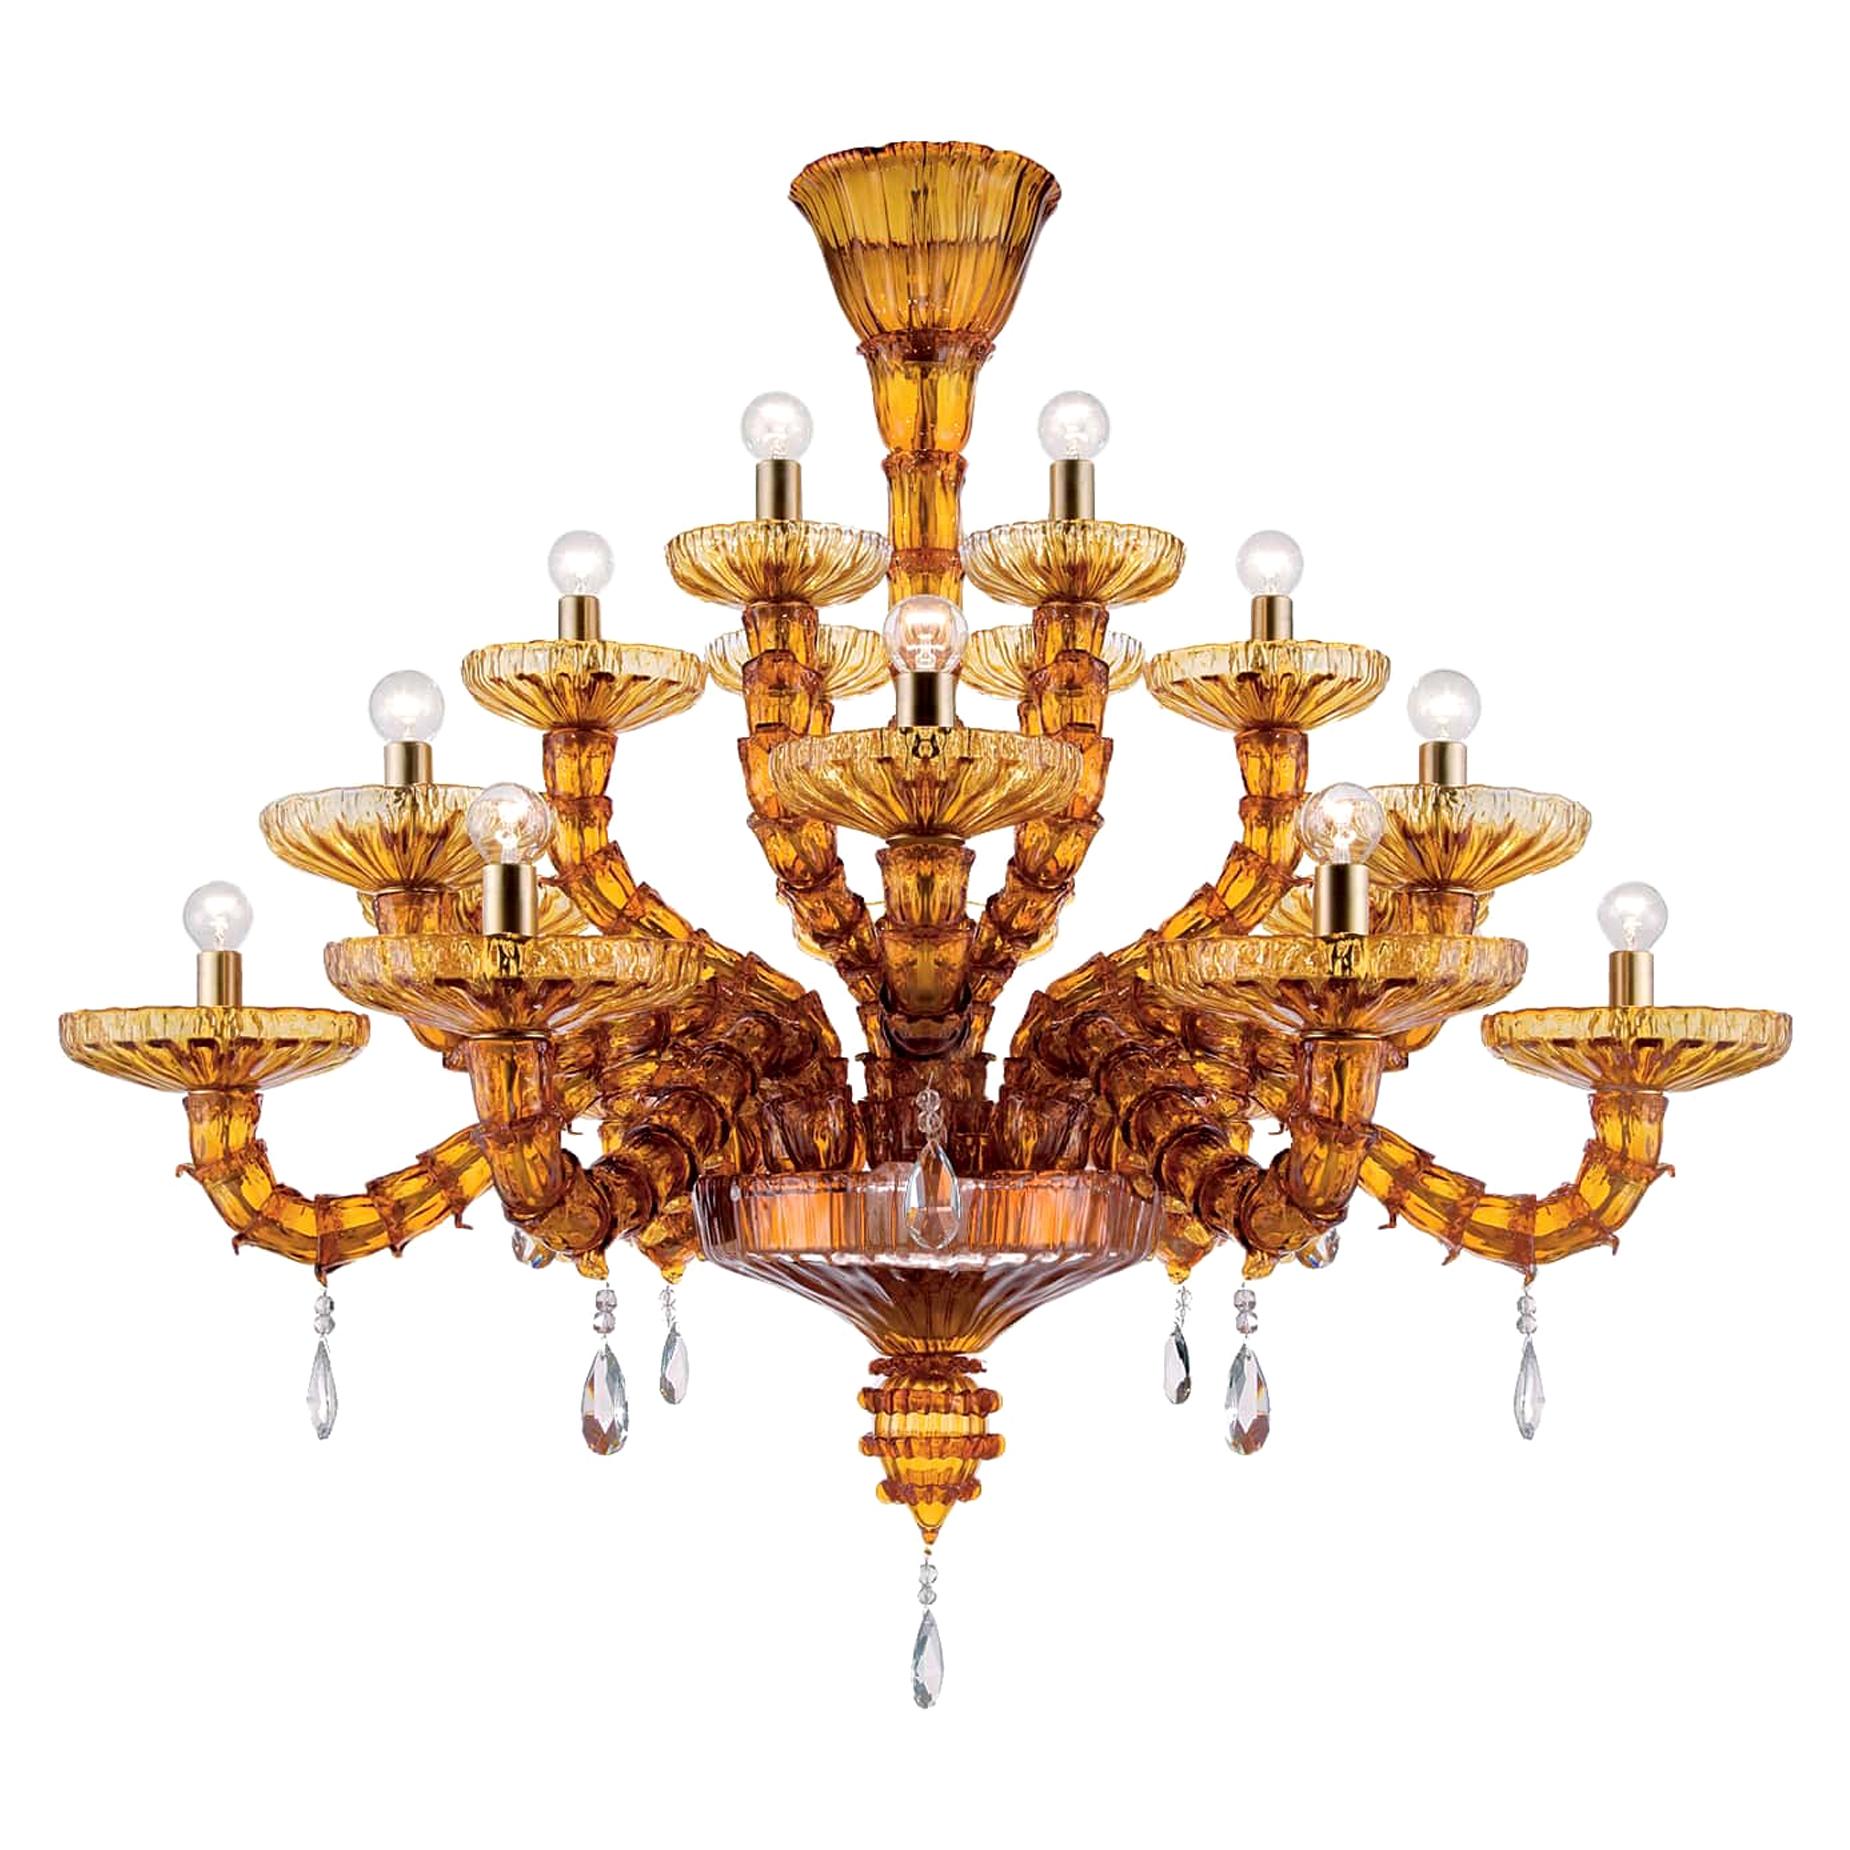 Artistic Handmade Murano Glass Chandelier Ca' D'oro by La Murrina